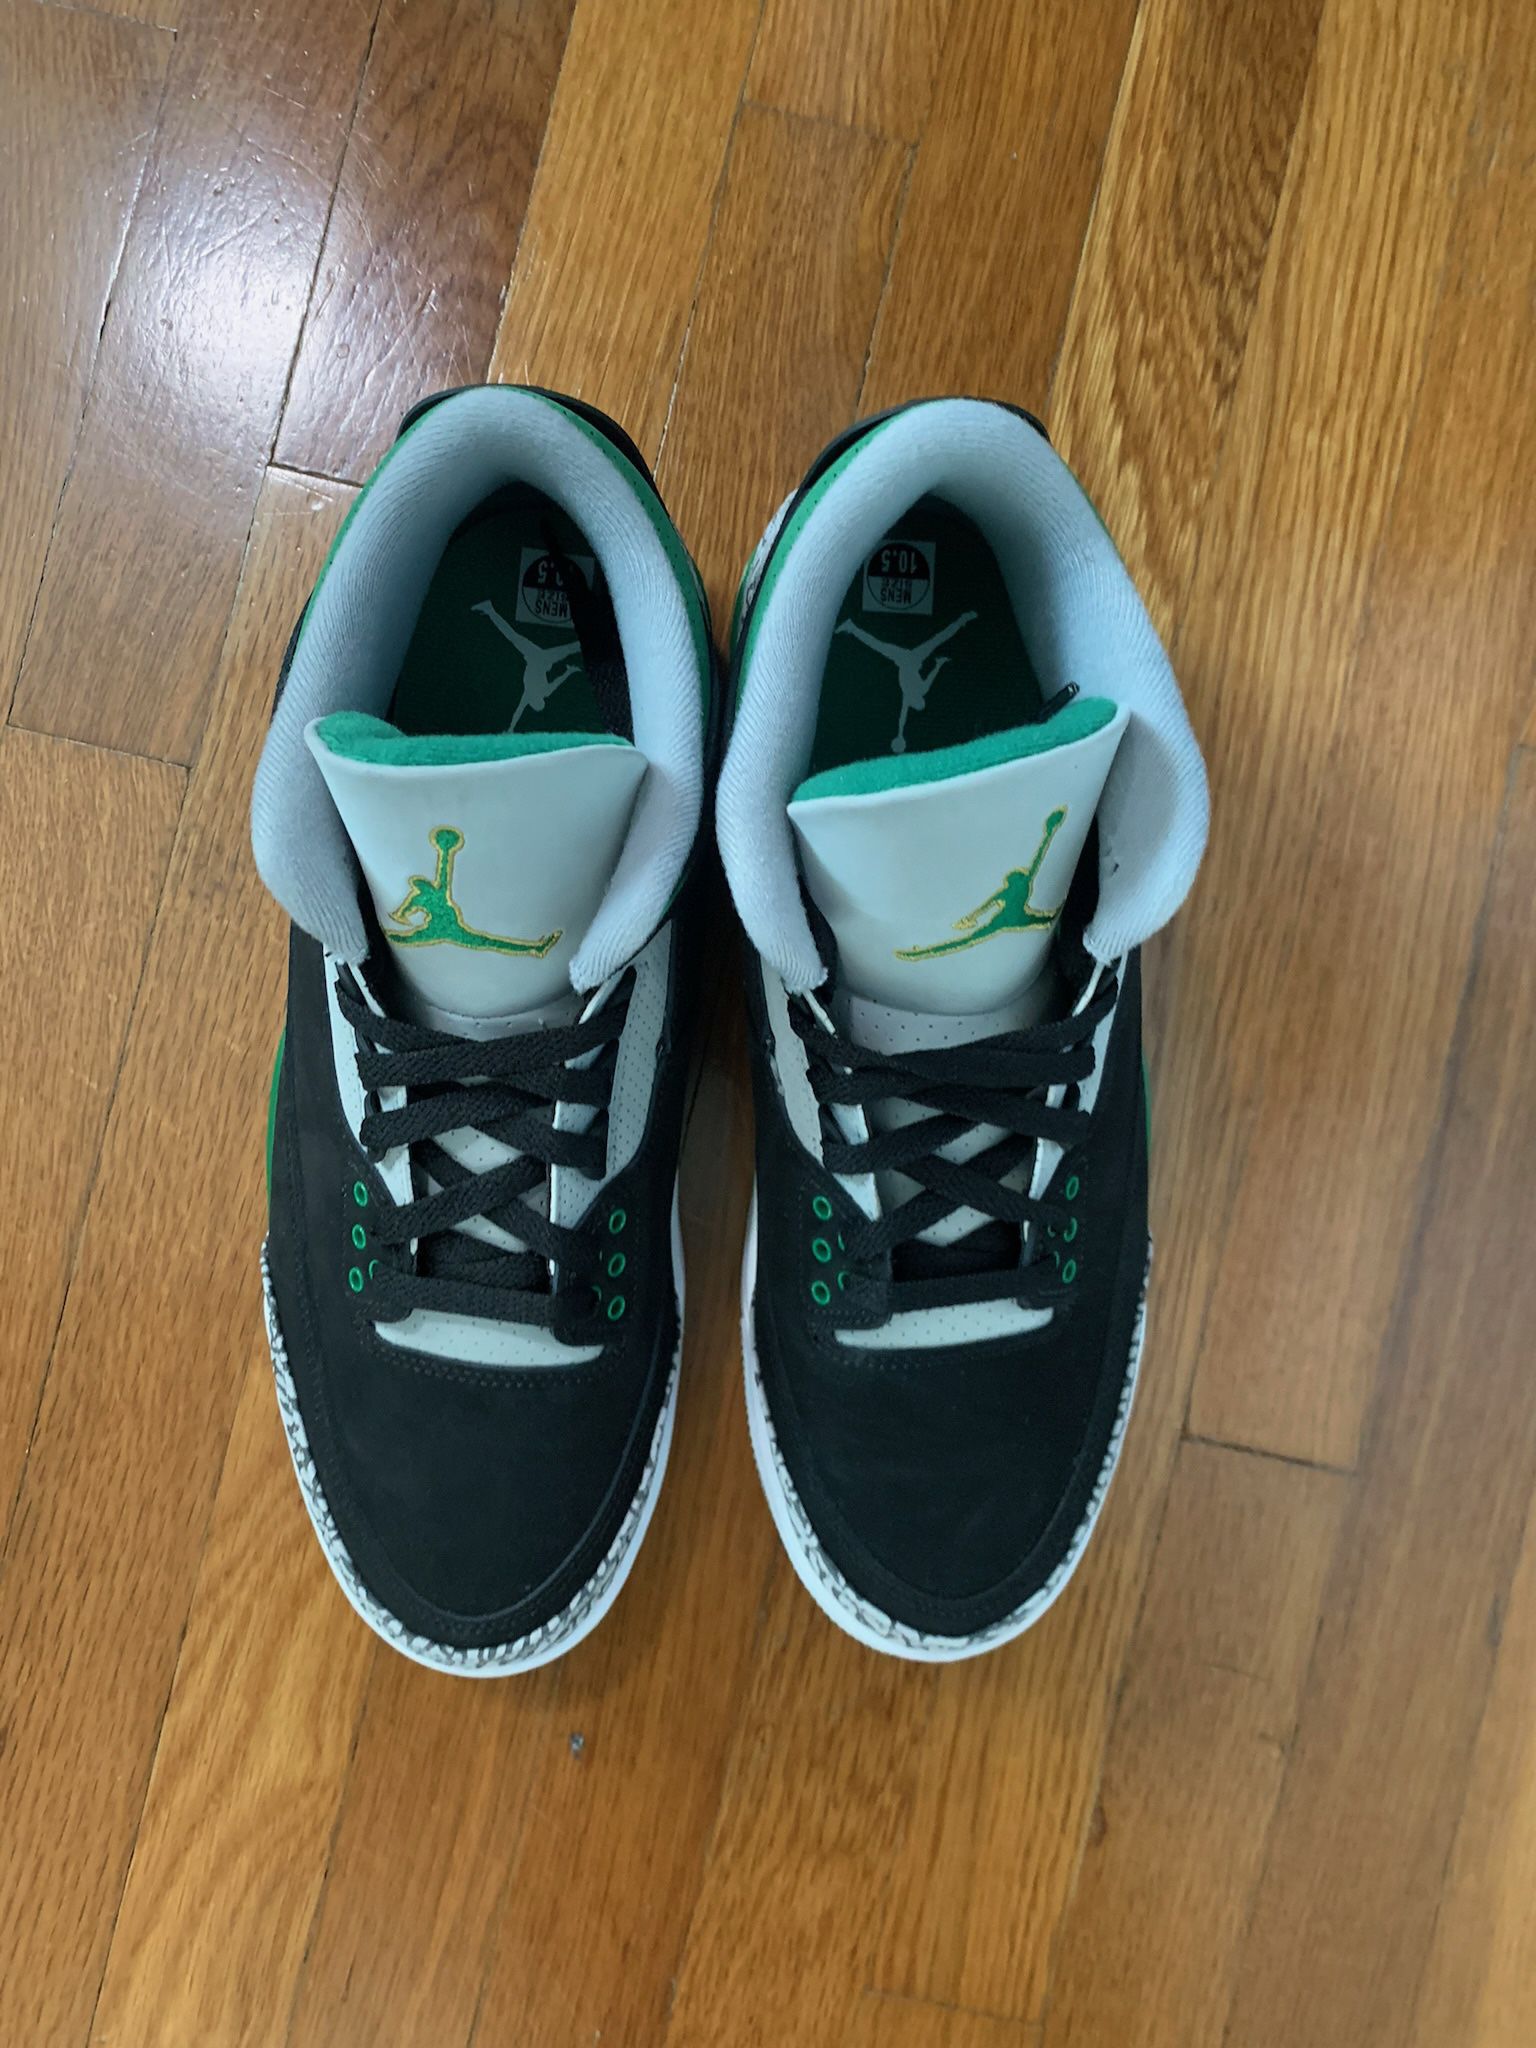 The Air Jordan 3 “Pine Green”  Sz10.5 Mens